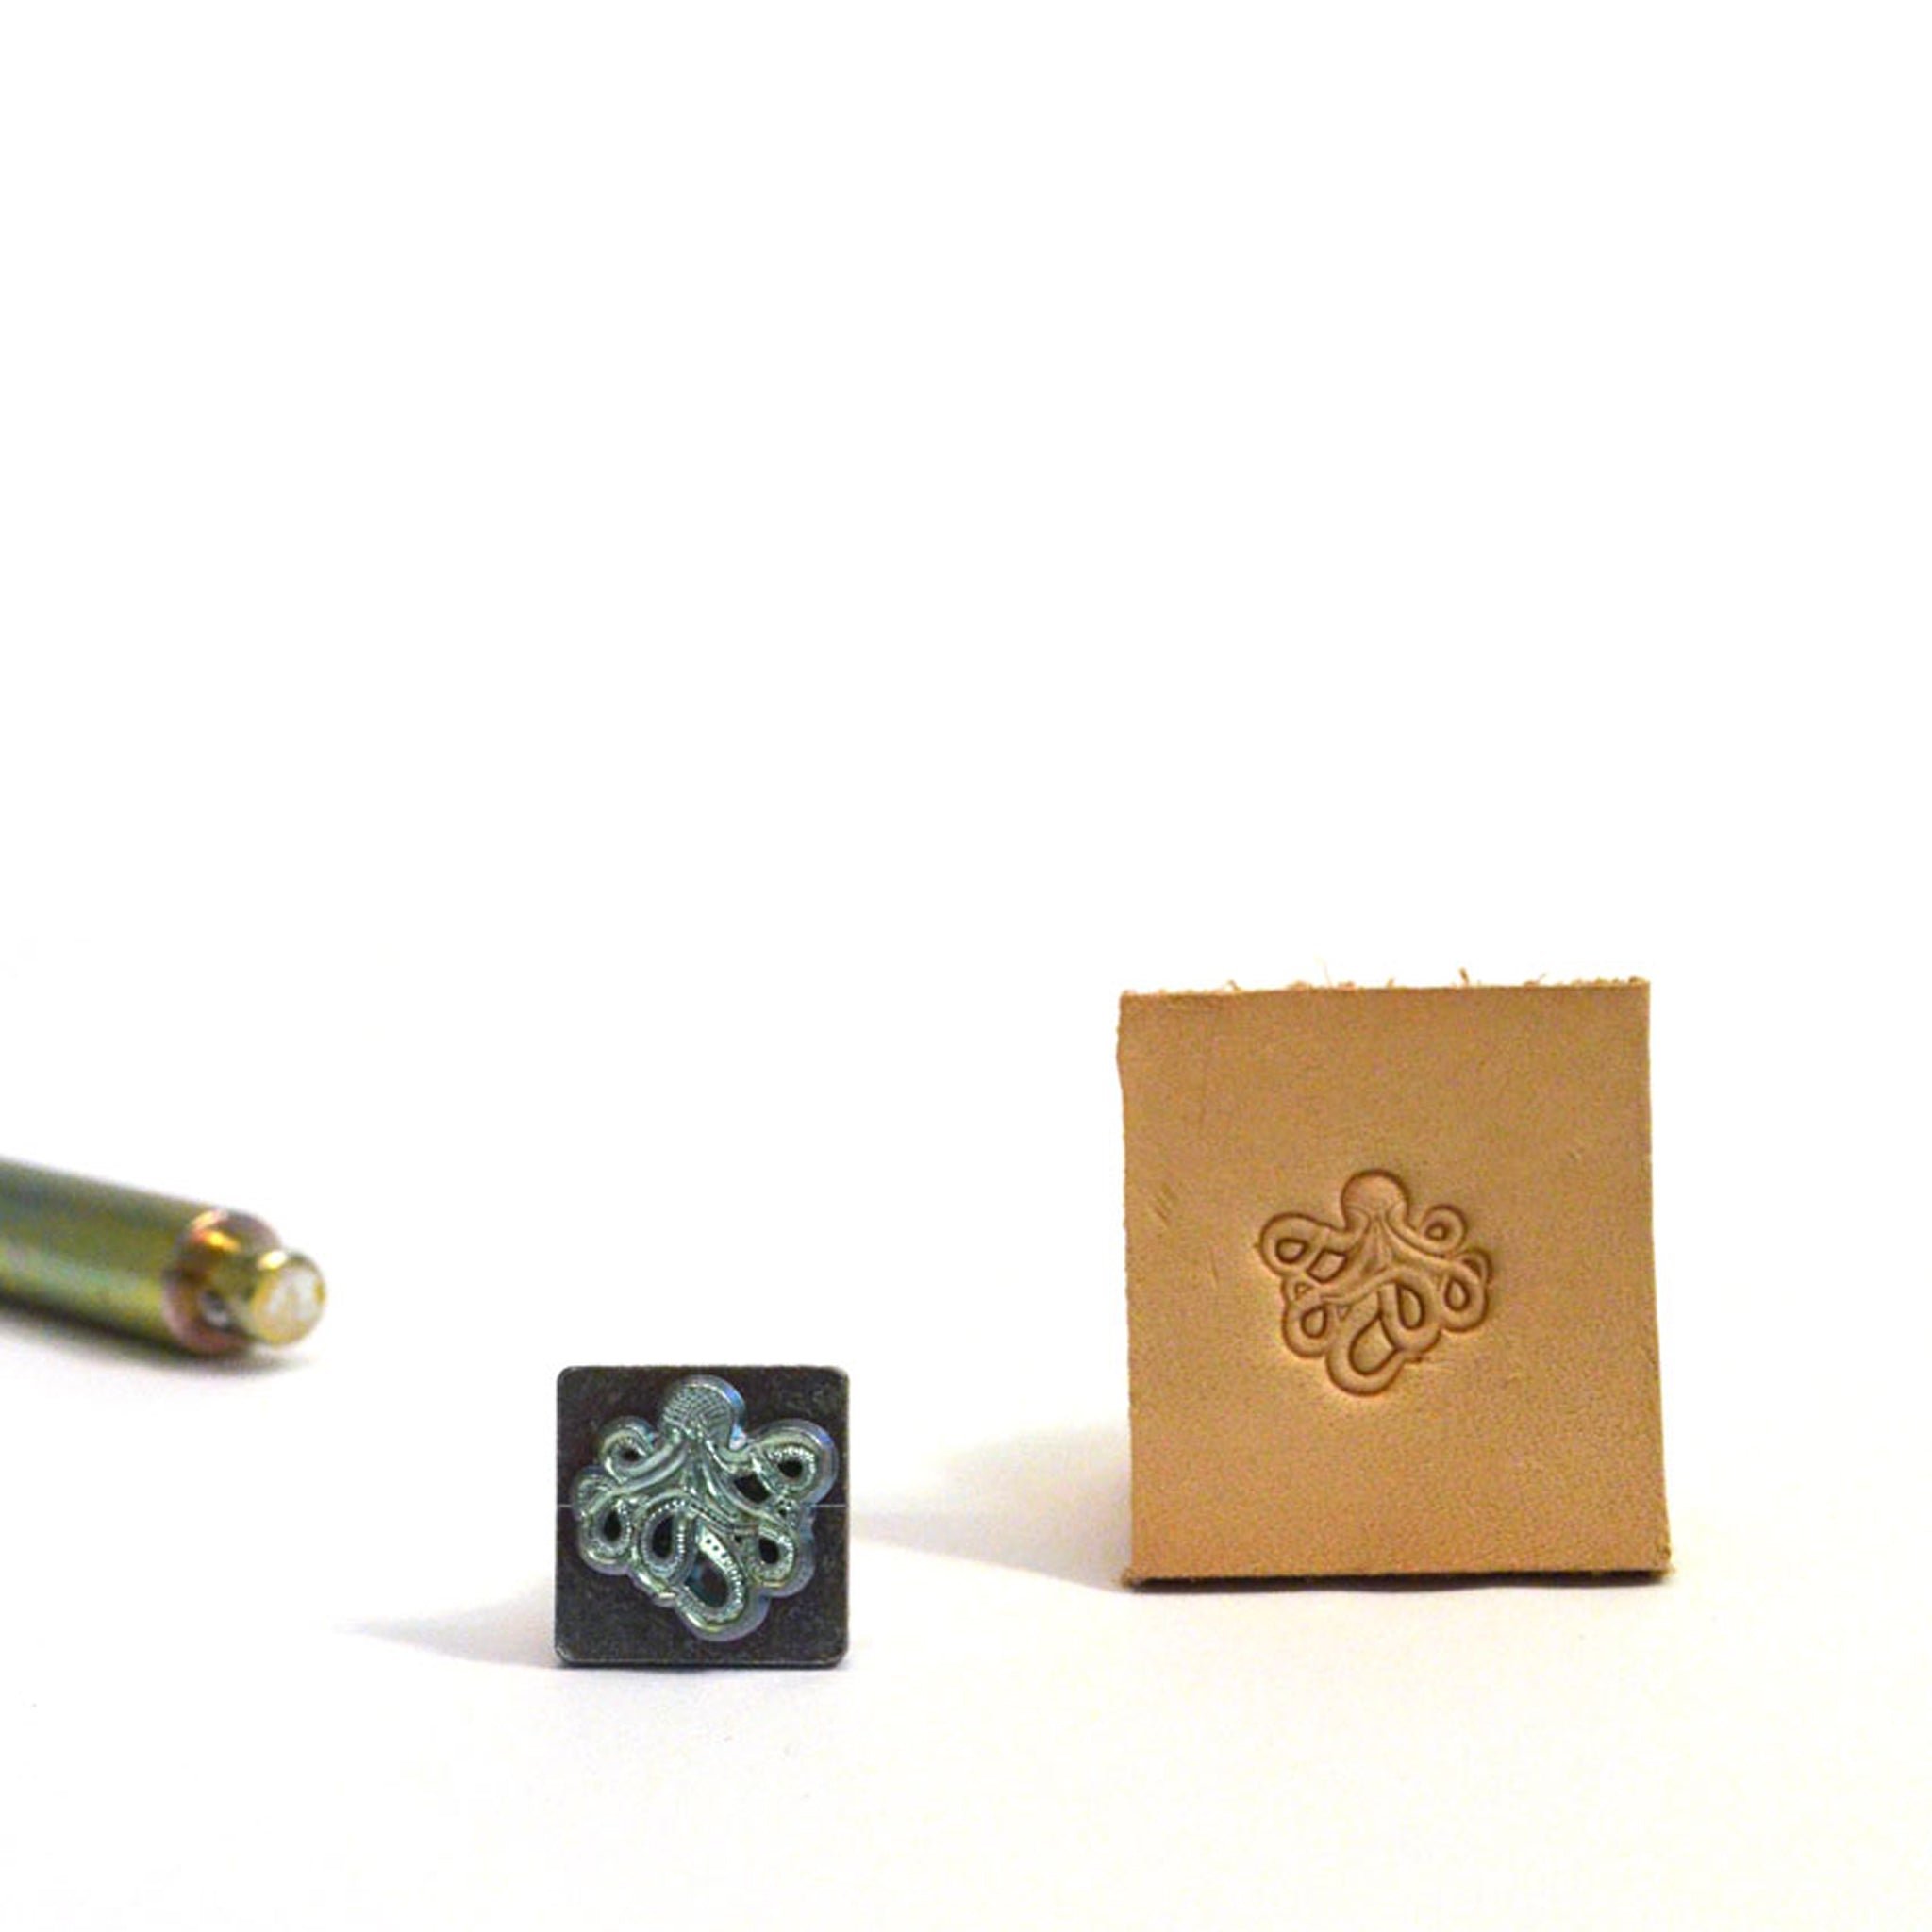 Octopus (Kraken) Mini 3D Embossing Stamp from Identity Leathercraft